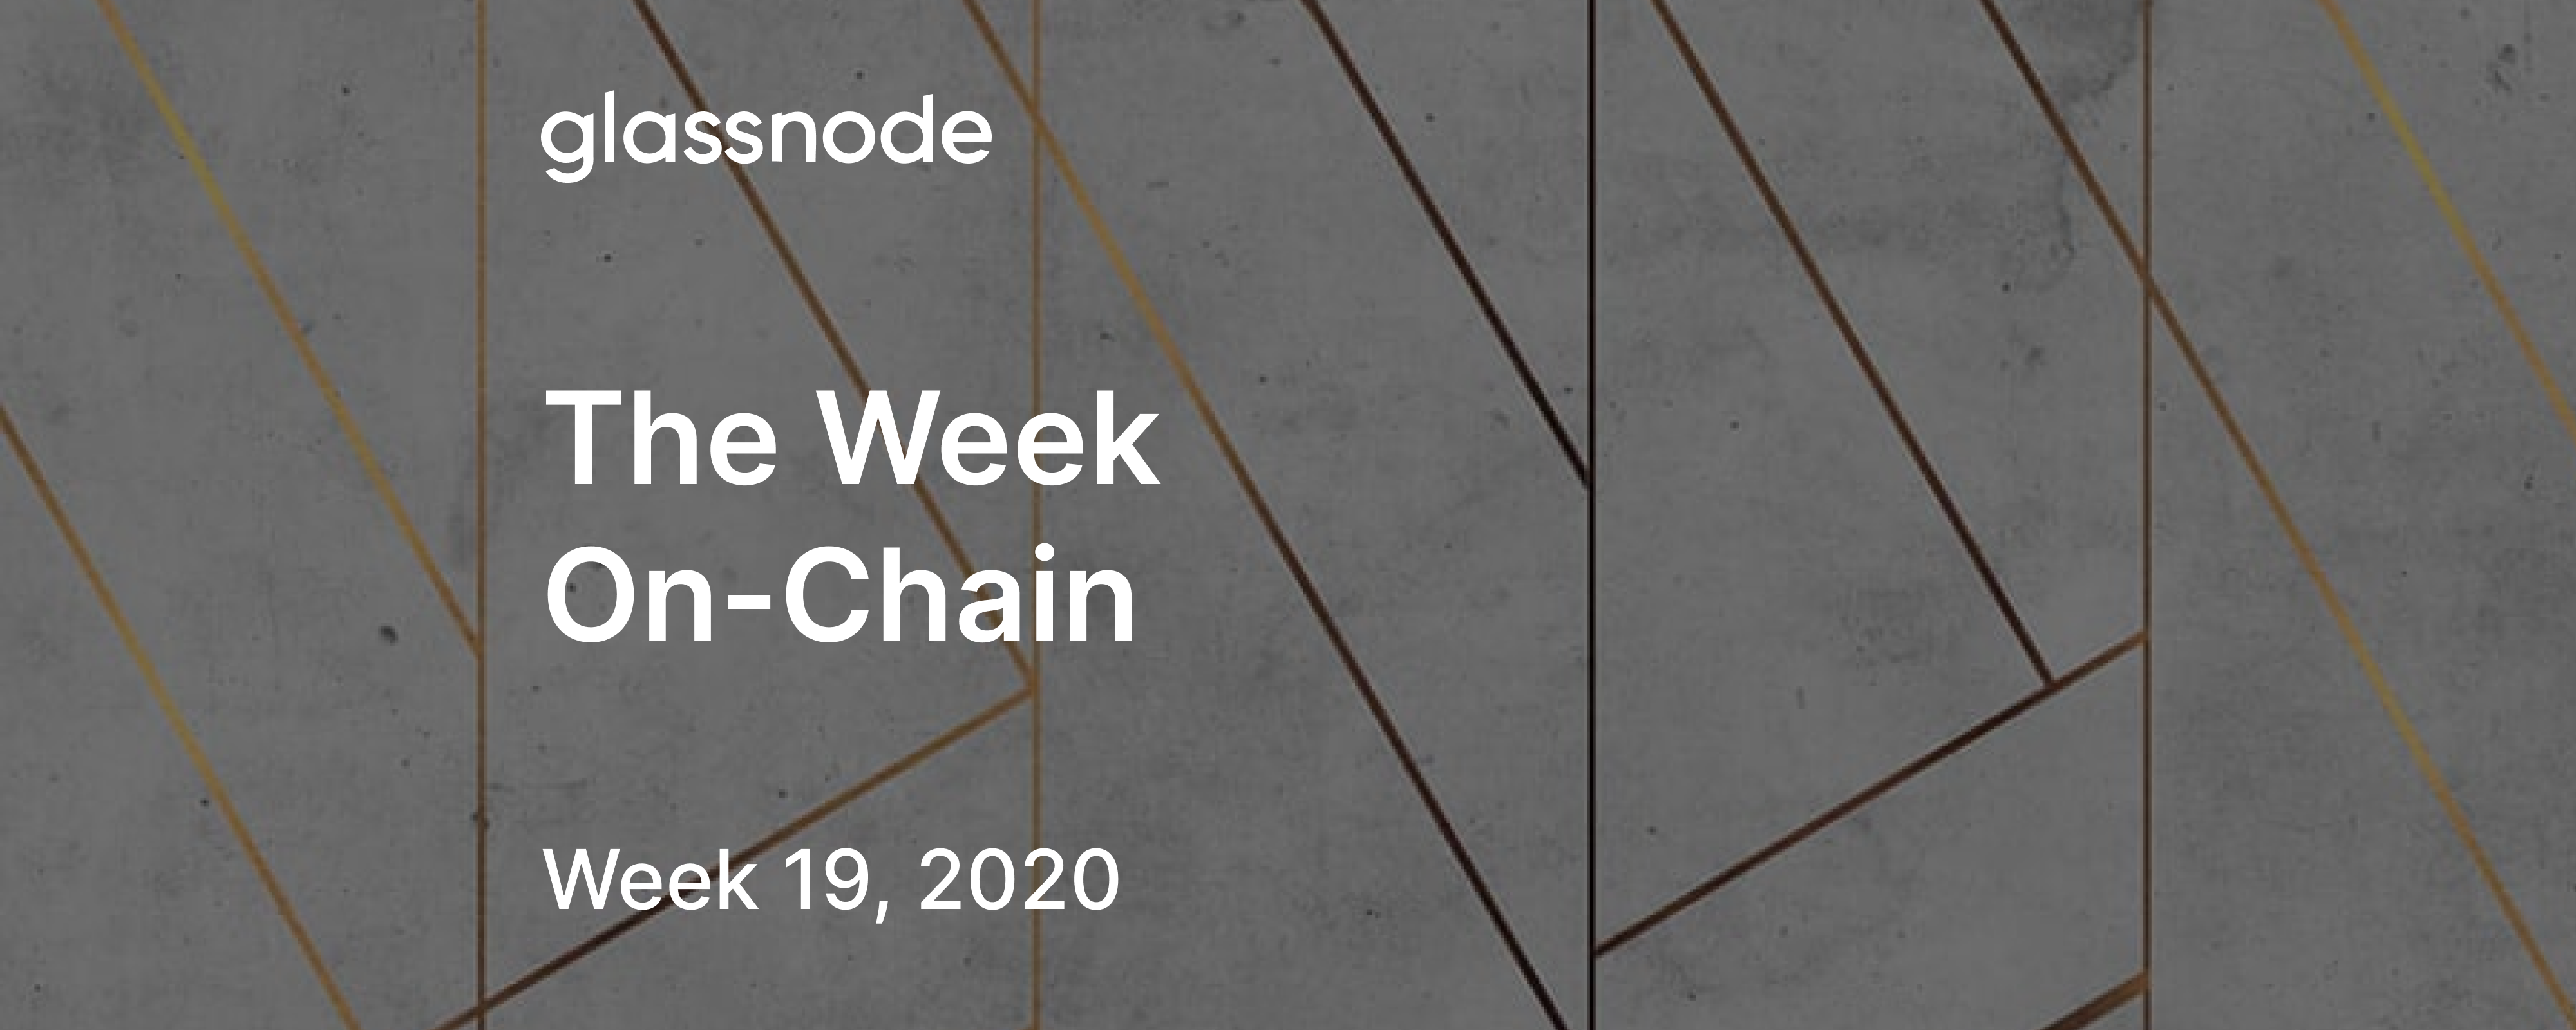 The Week On-Chain (Week 19, 2020)